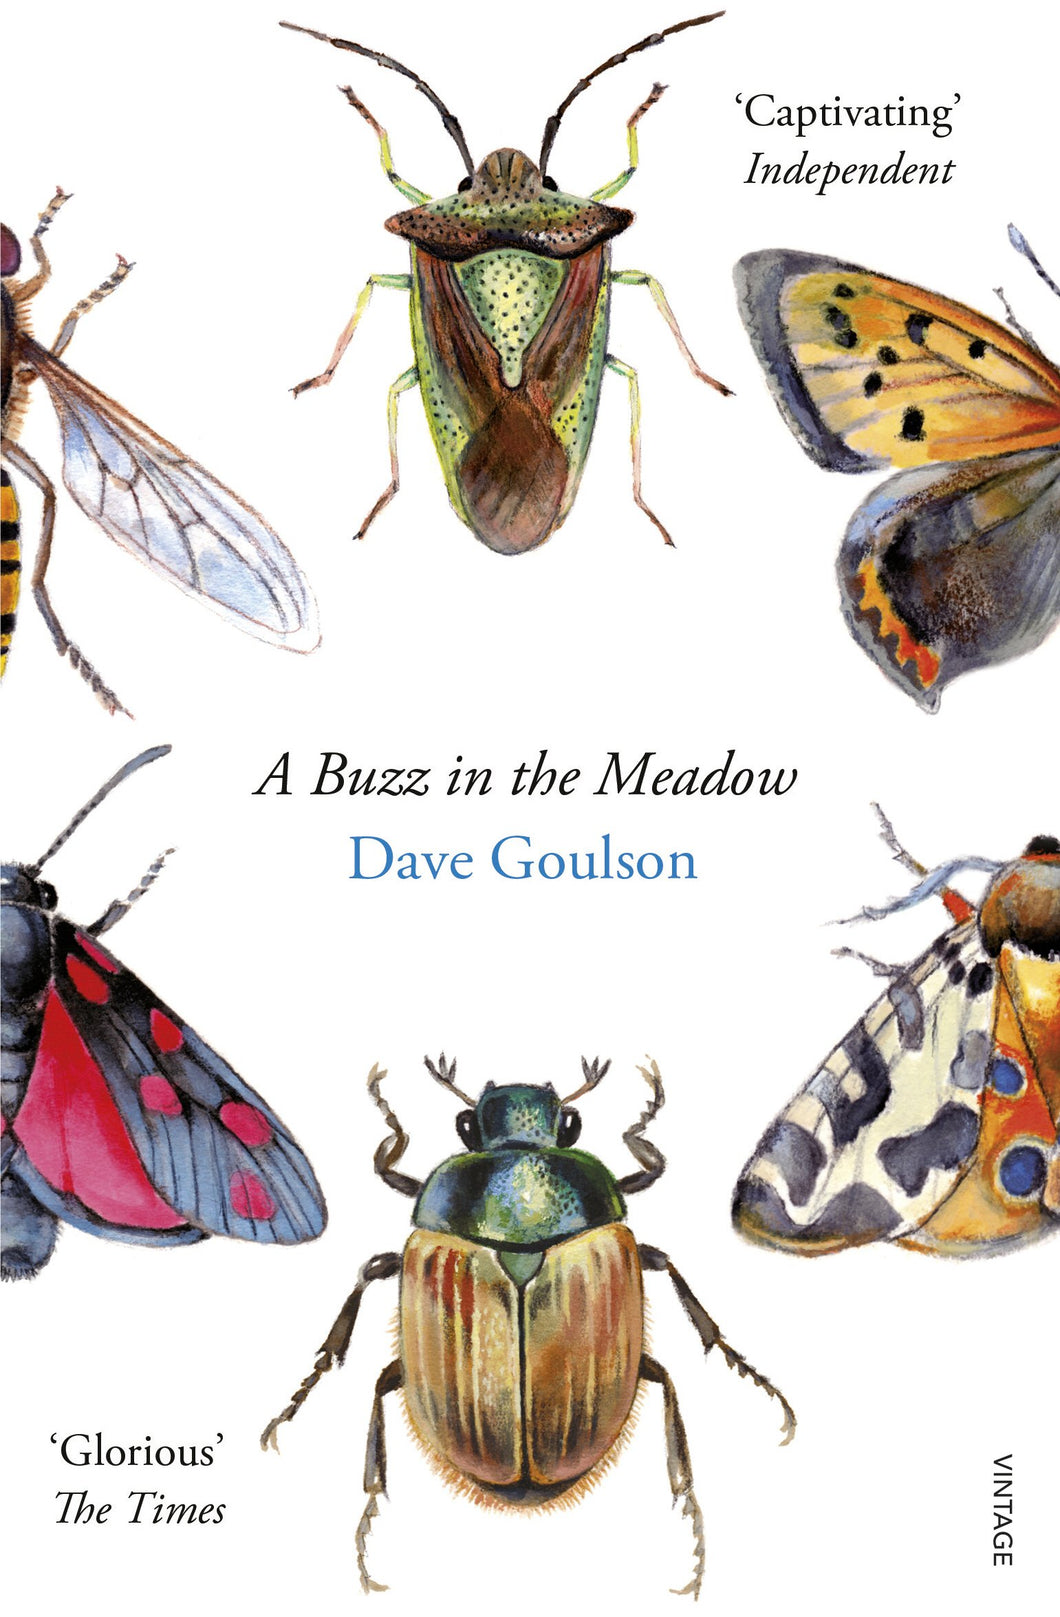 Buzz in the Meadow, Dave Goulson